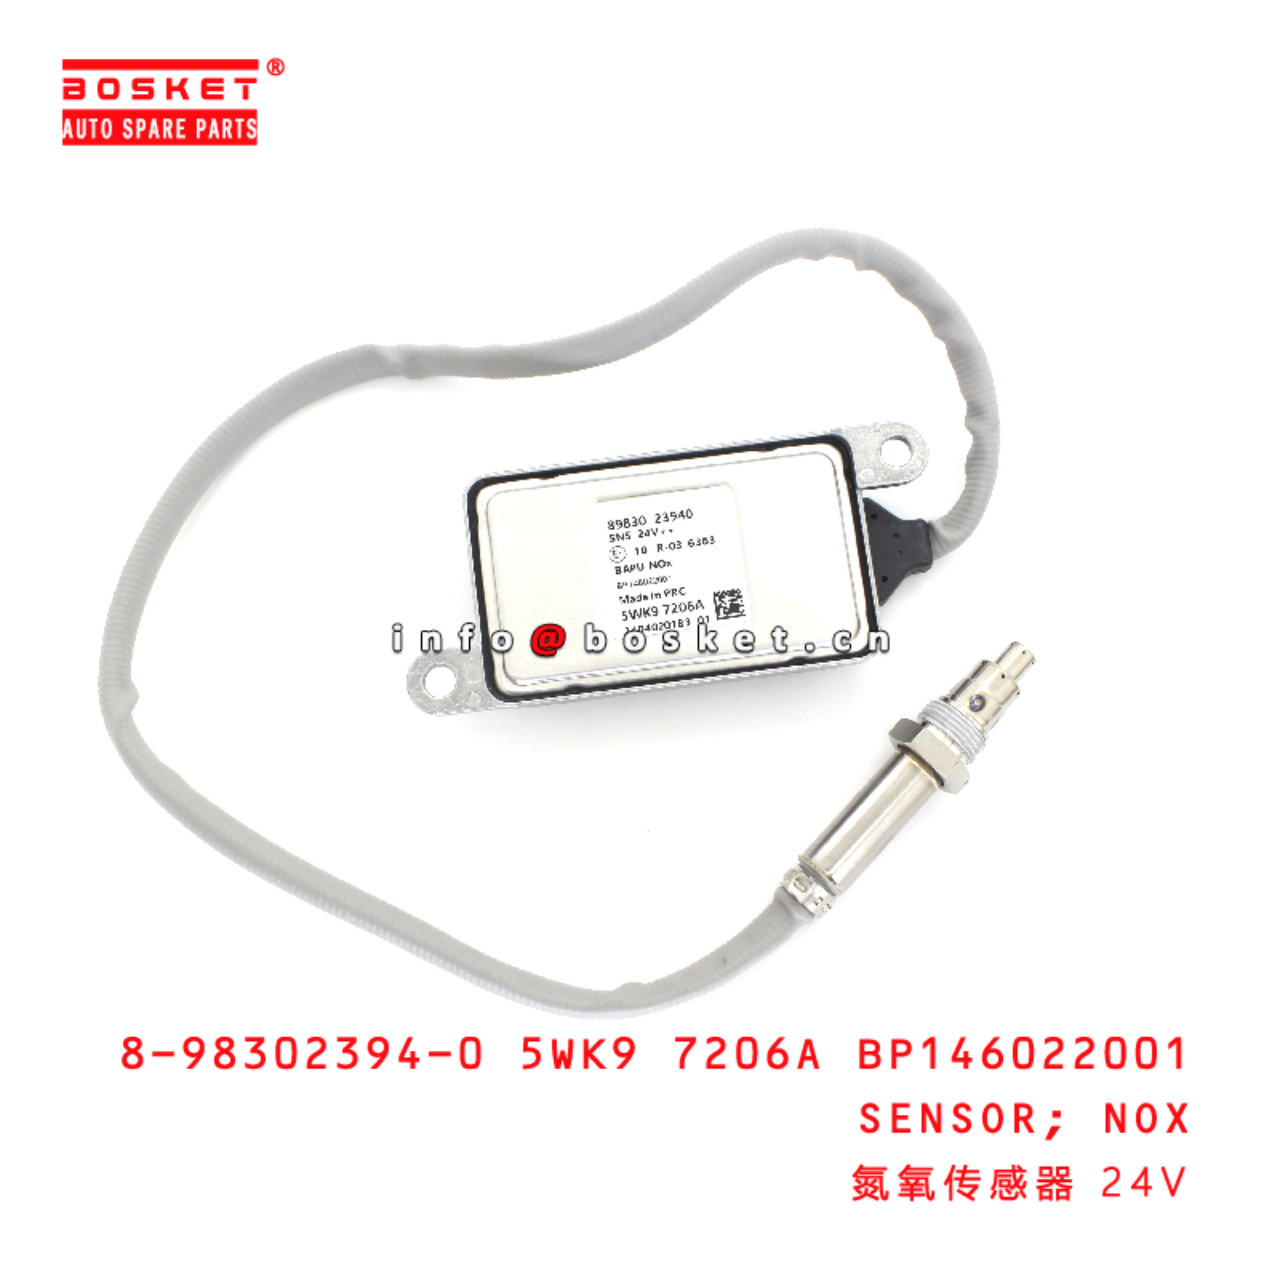 8-98302394-0 5WK9 7206A BP146022001 Nox Sensor suitable for ISUZU 8983023940